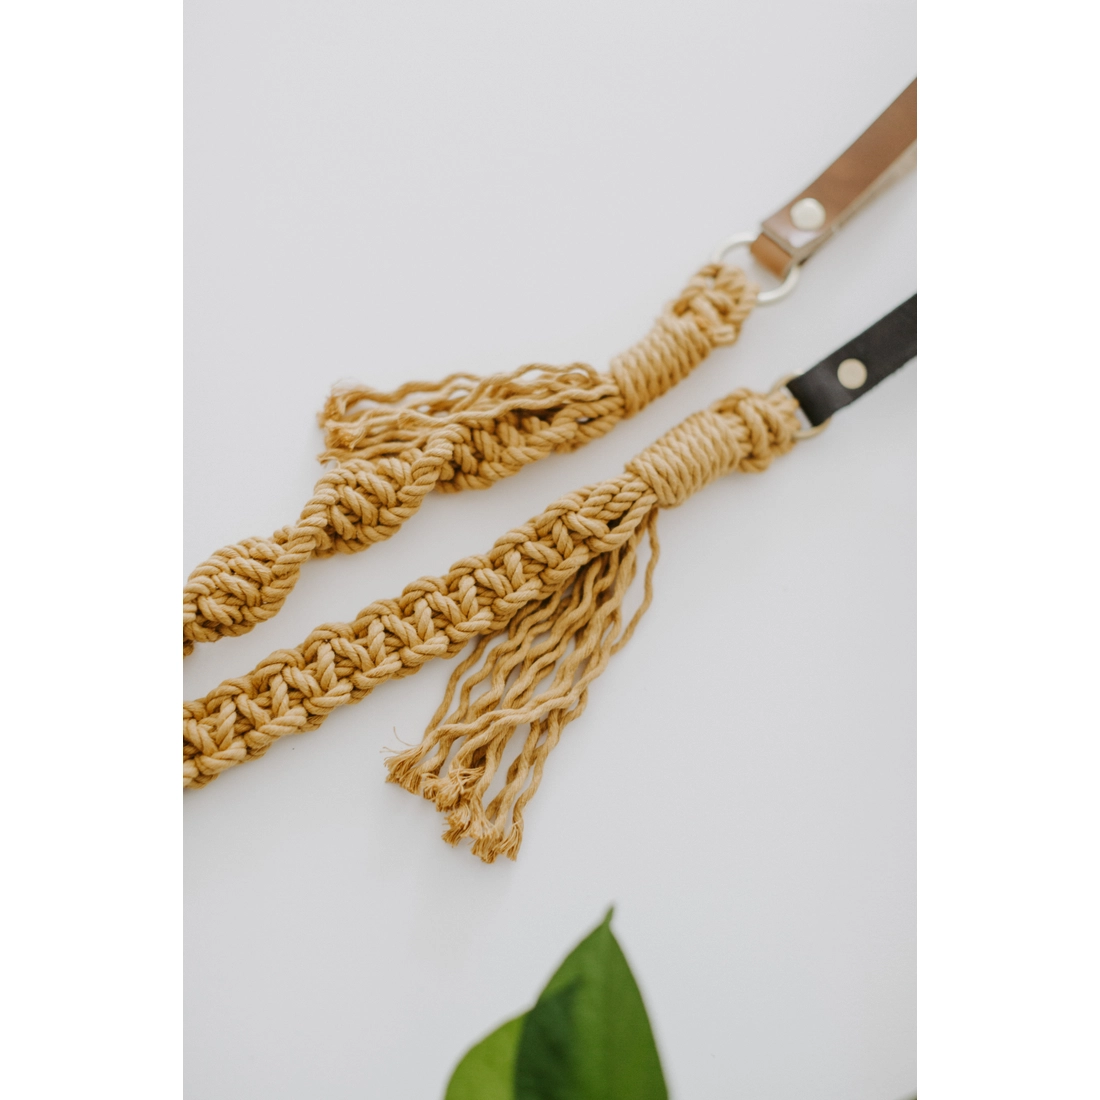 Macrame Dog Leash - Mustard Rope / Brown Leather Handle